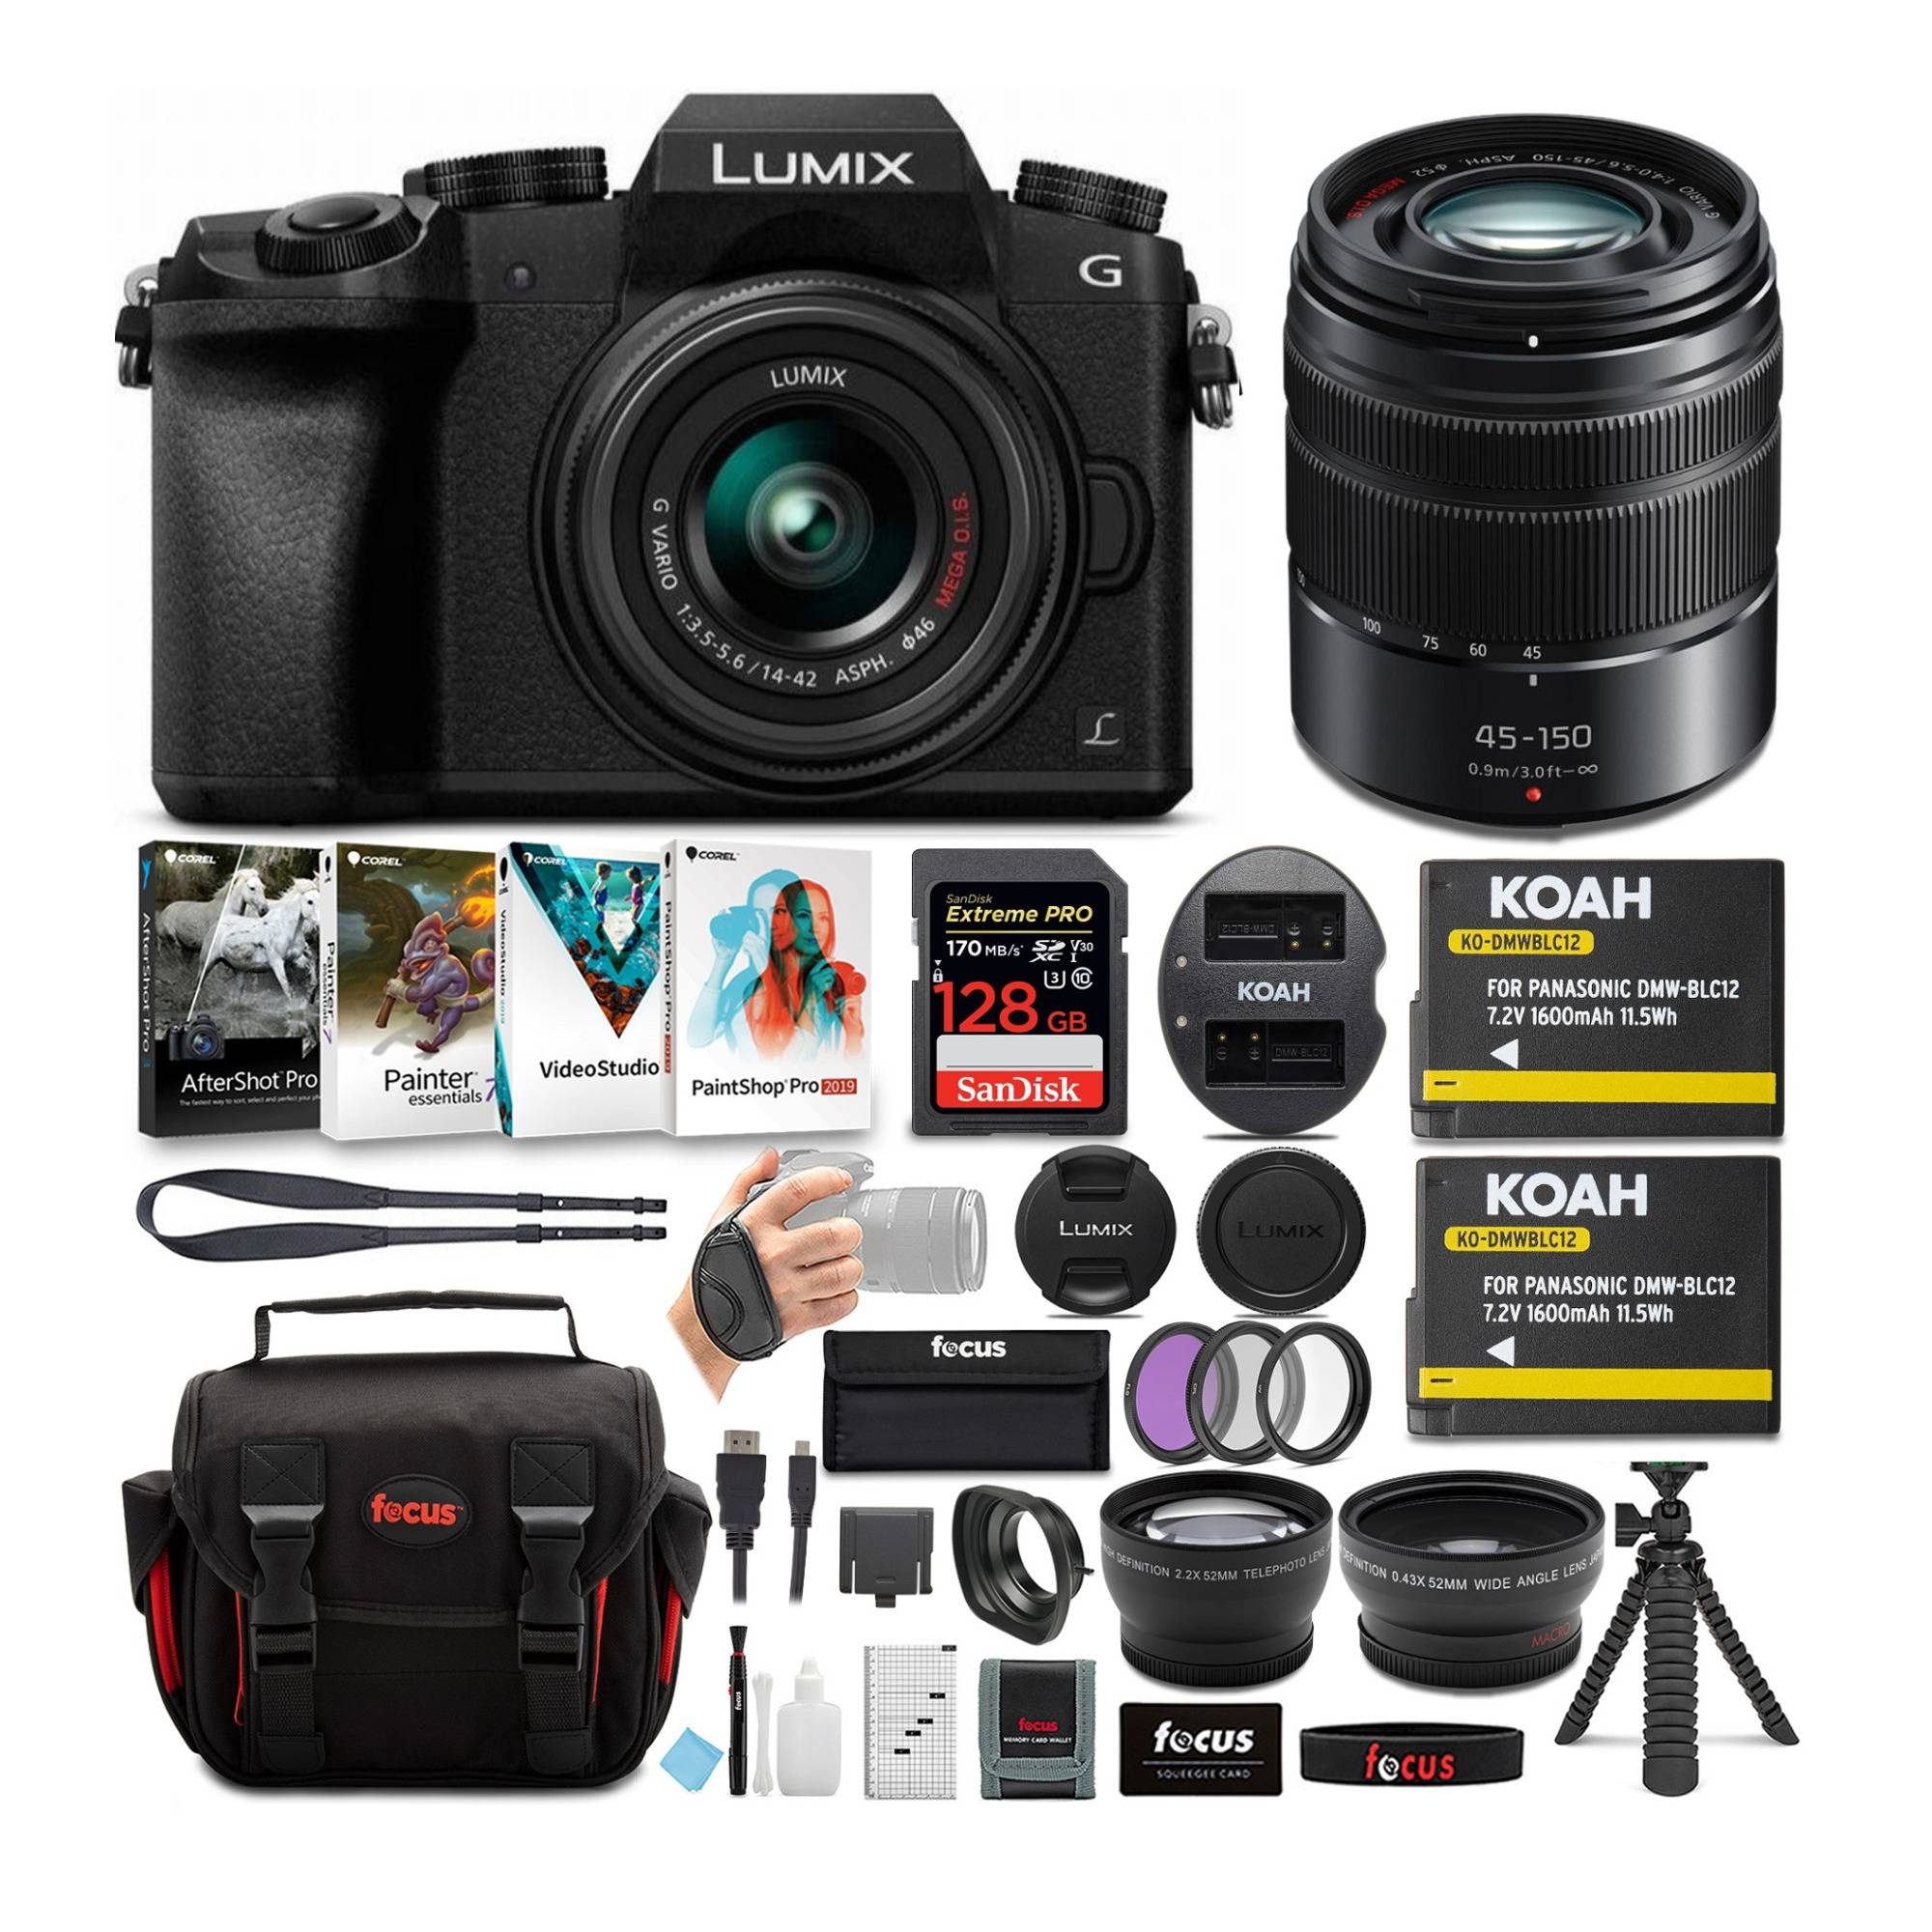 Panasonic LUMIX G7 Mirrorless Camera (Black) with 14-42mm Lens and Accessory Bundle